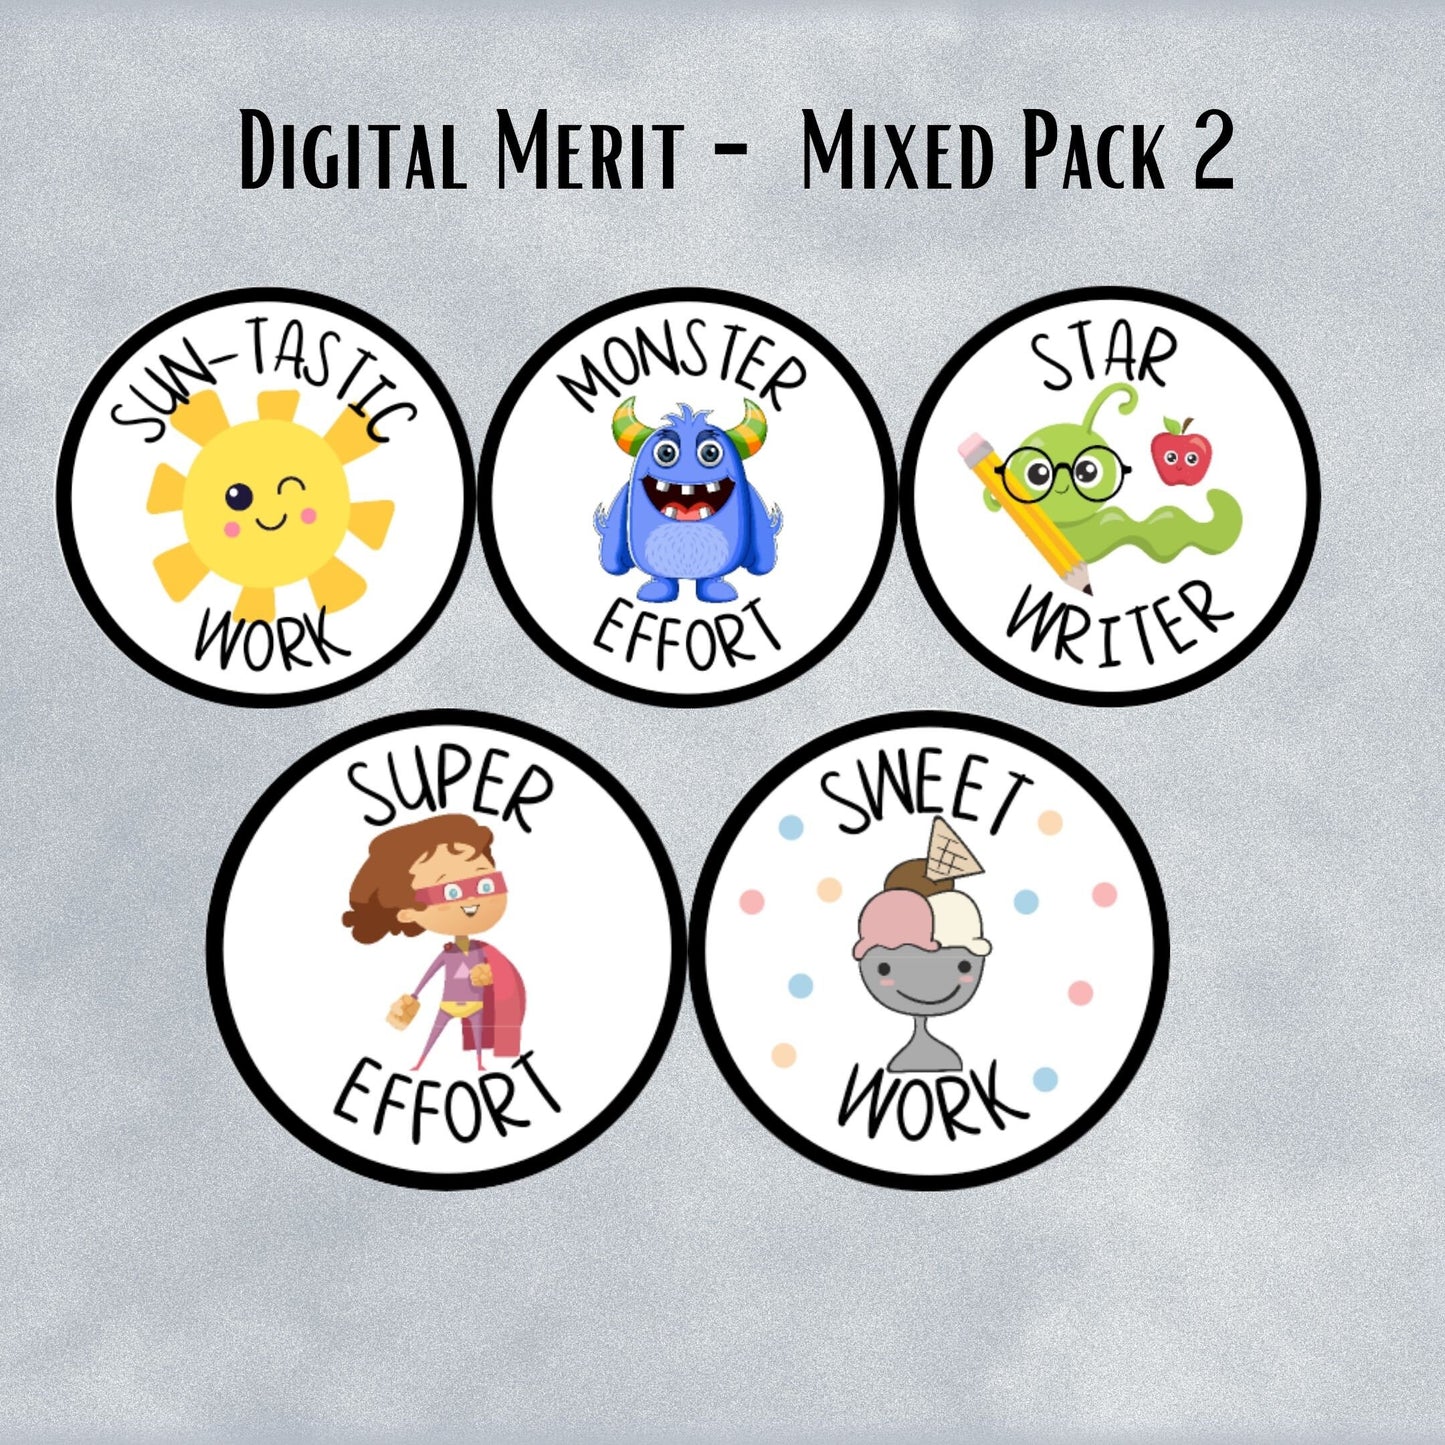 Mixed Digital Merit and Reward pack 2